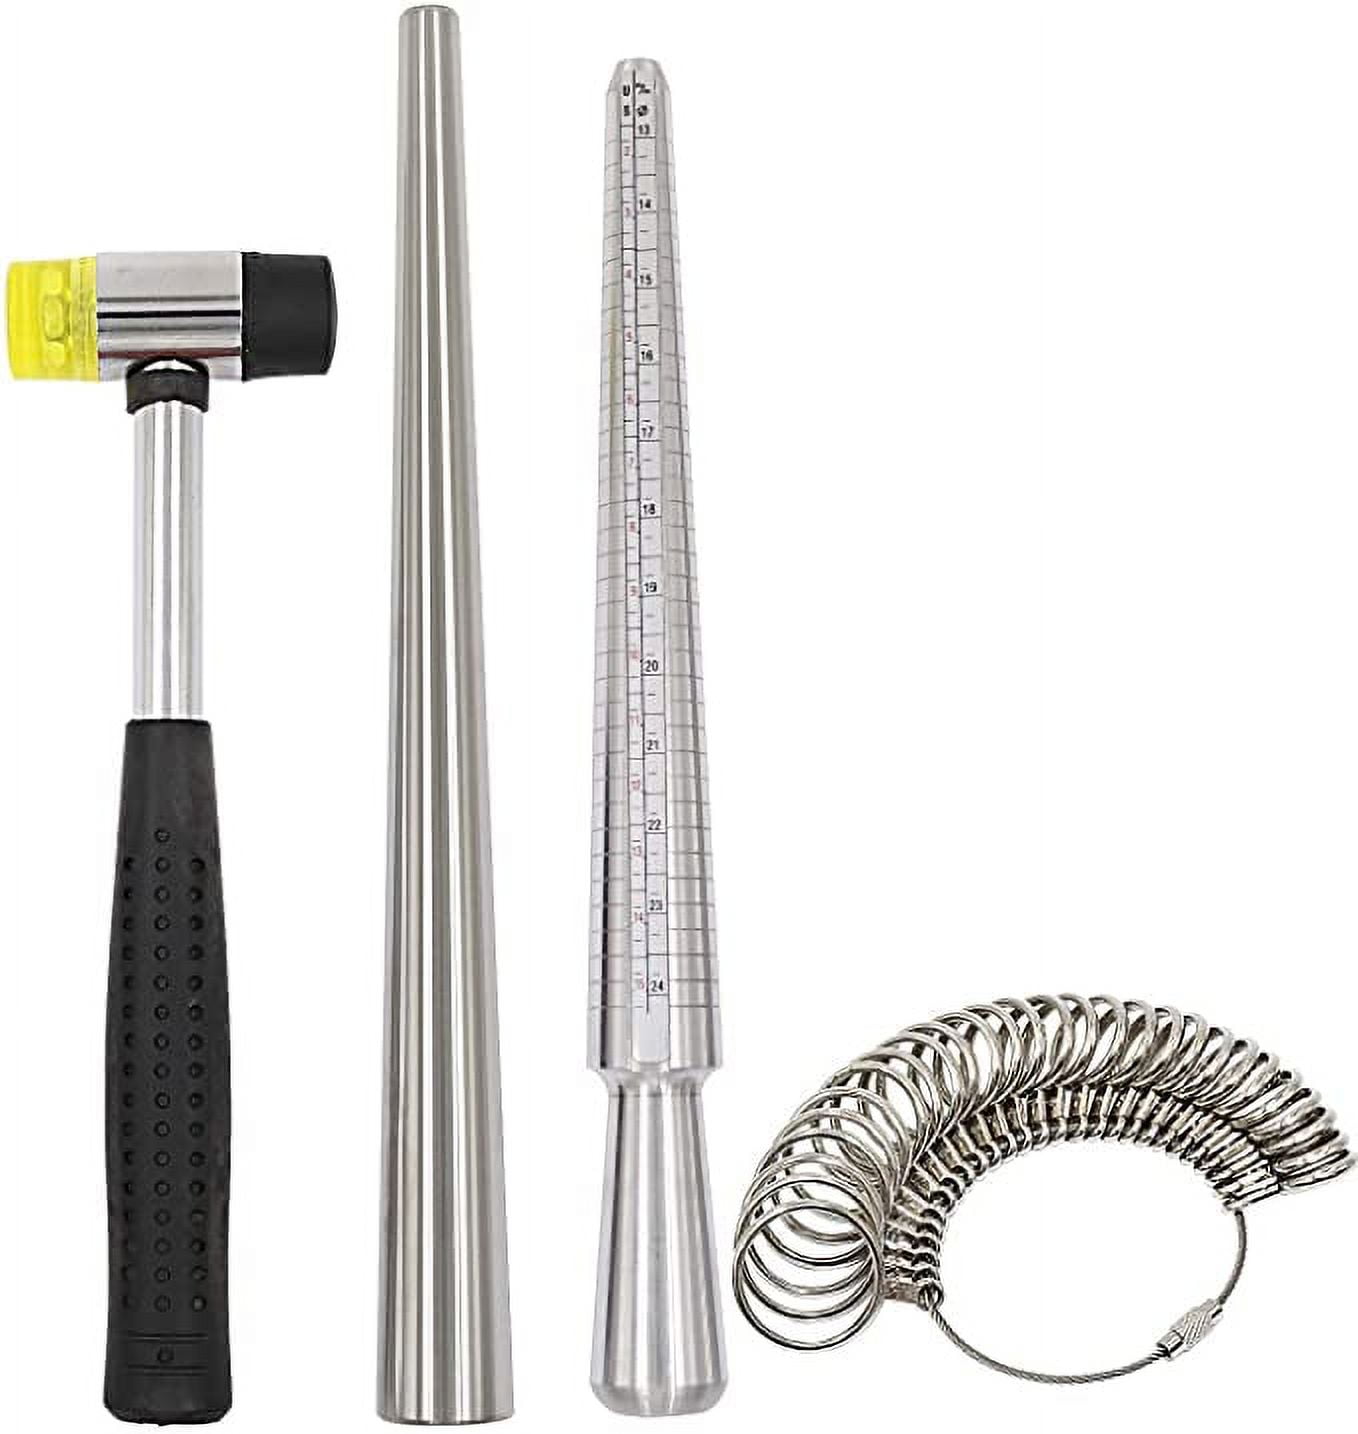 YIEPET US Ring Sizing Kit,Gauge Set with Measuring tool,sizes 0-15 Steel Ring mandrel.finger sizer1-13 with Half size,measuri